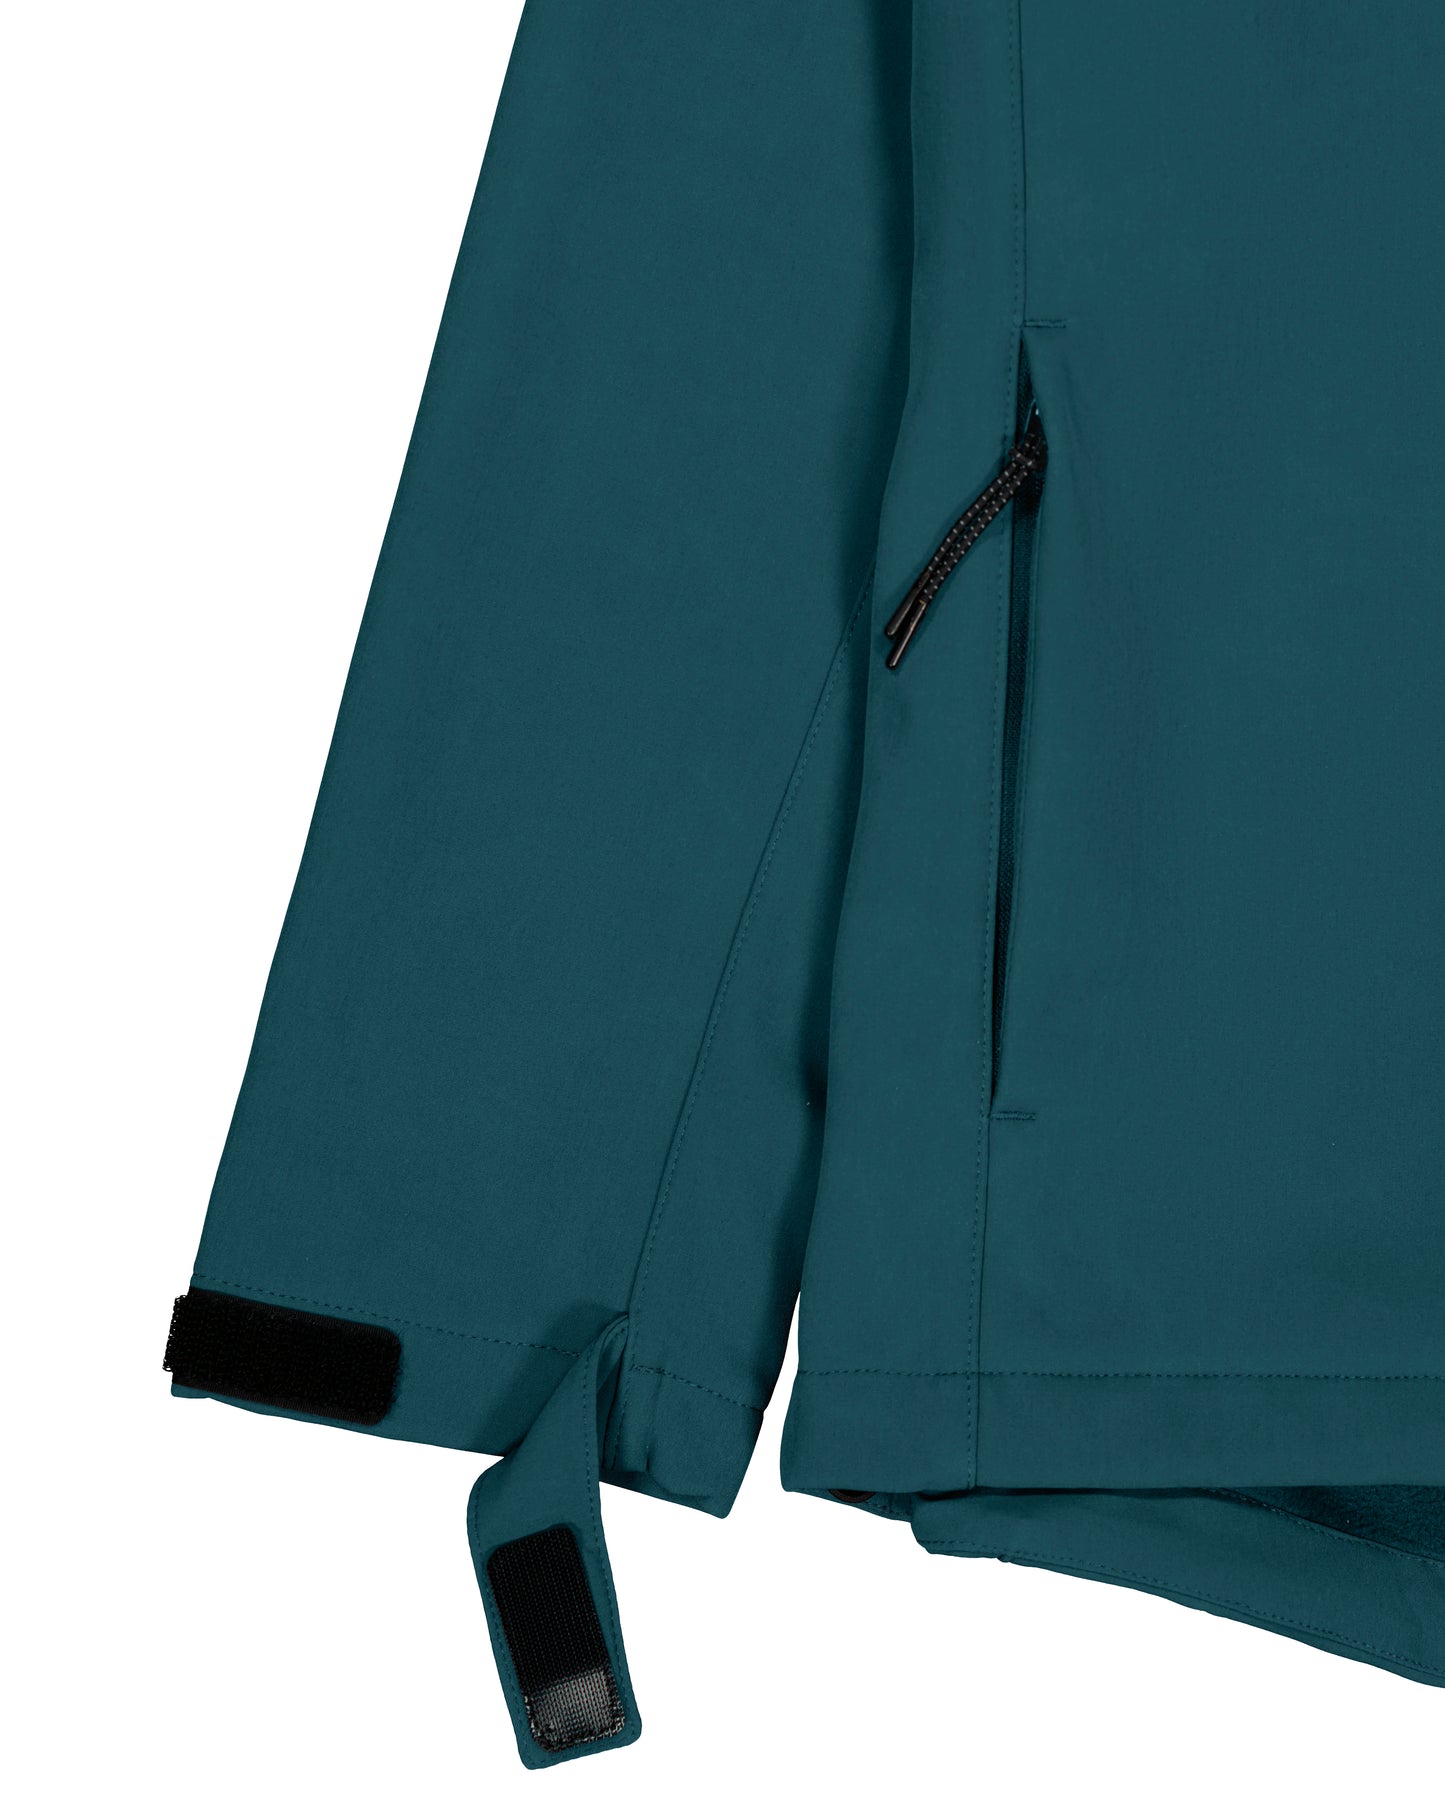 PIERRE BERGER - Damen Softshell Jacke mit Kapuze 100% recycelt Stick